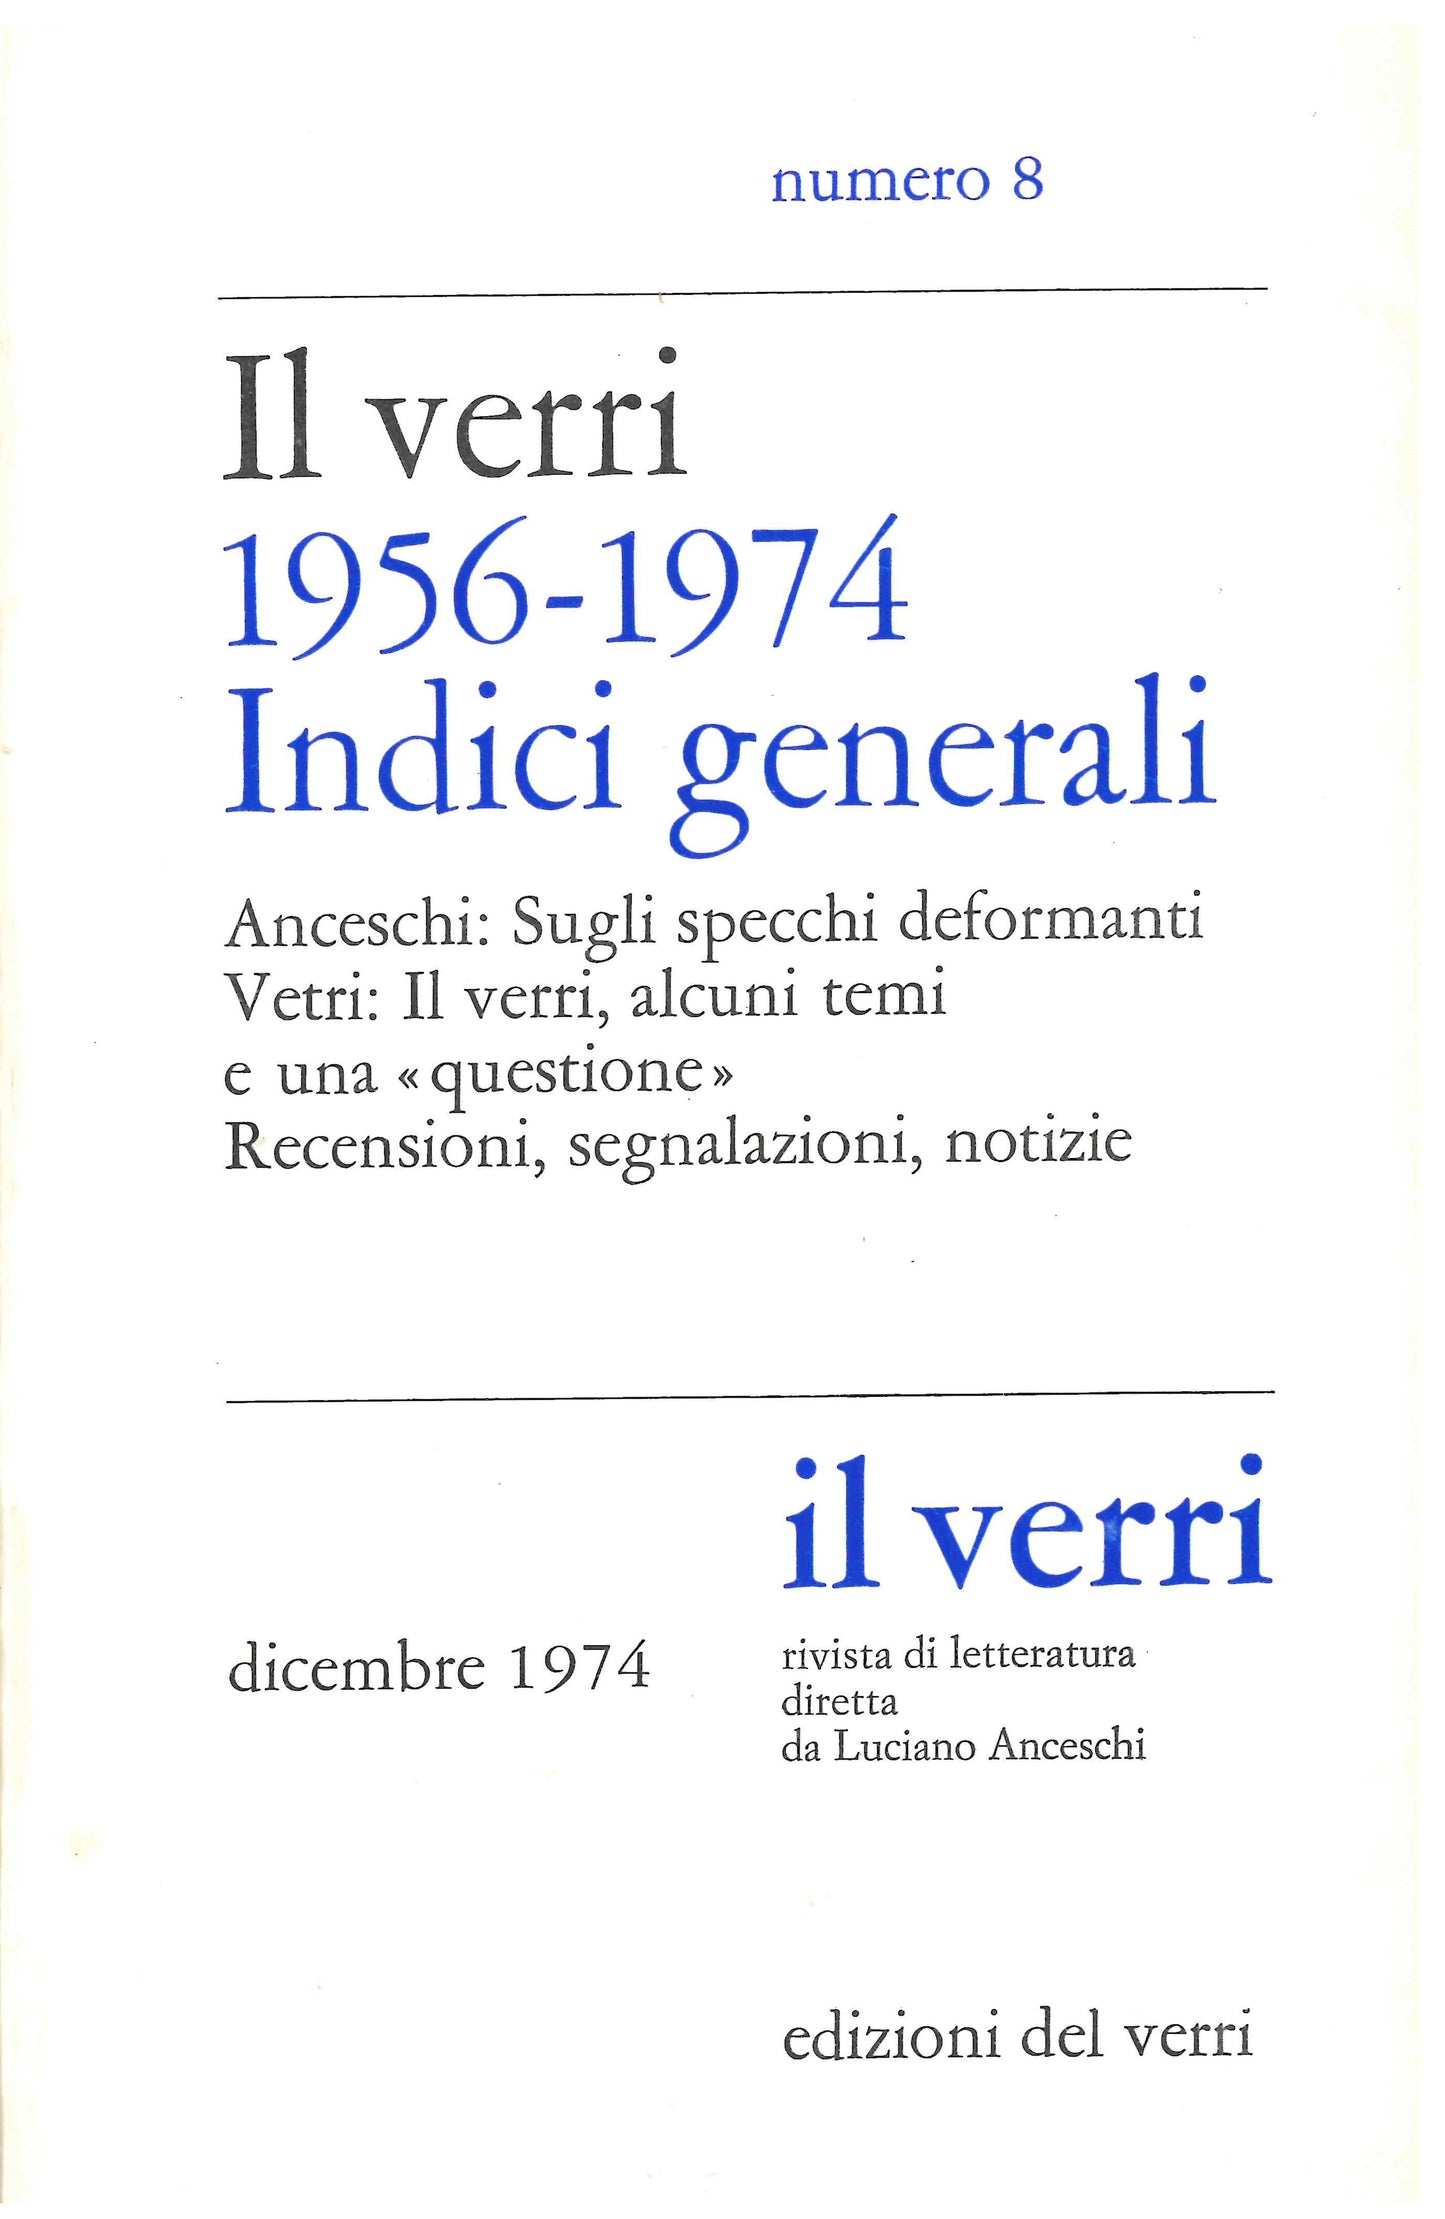 Rivista Il Verri - Quinta serie 1974 n 8 - 1956 - 1974 indici generali